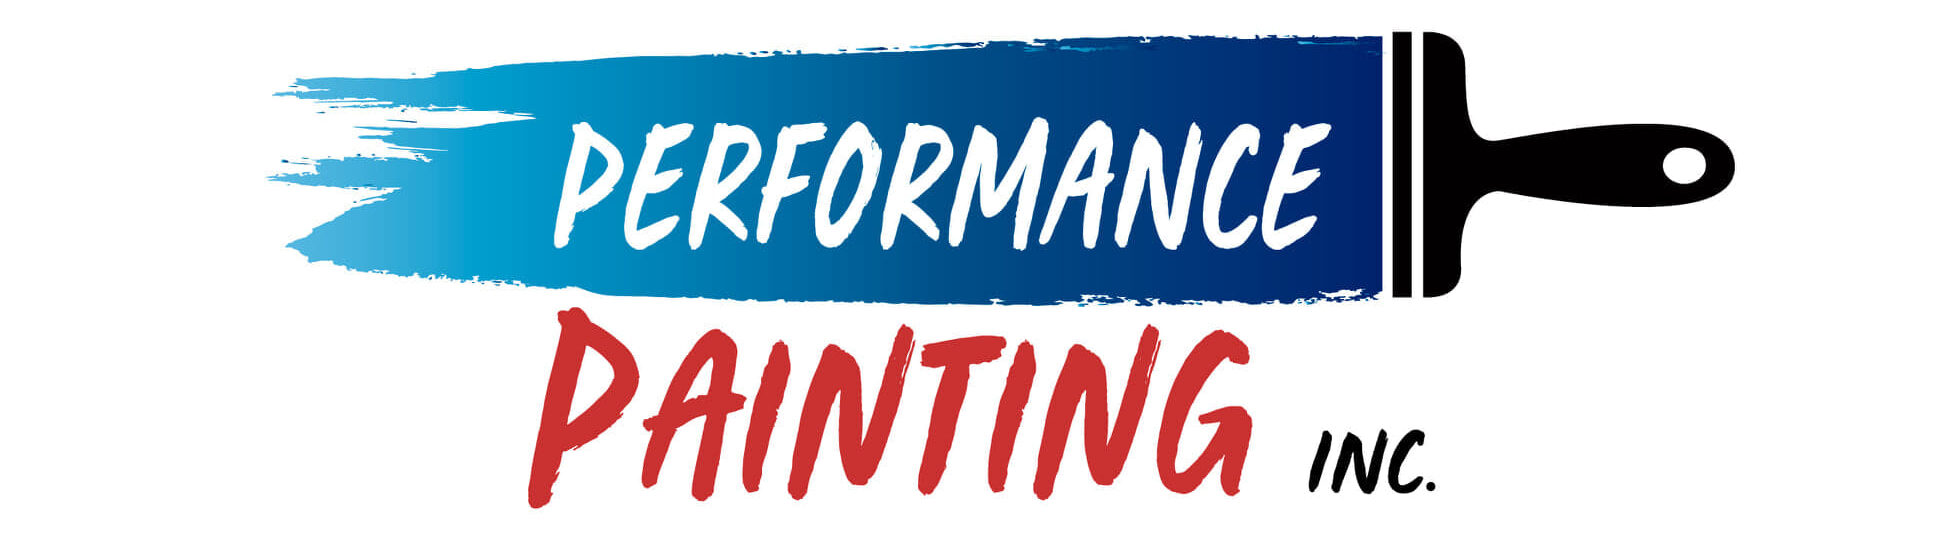 Performance Painting, Inc.